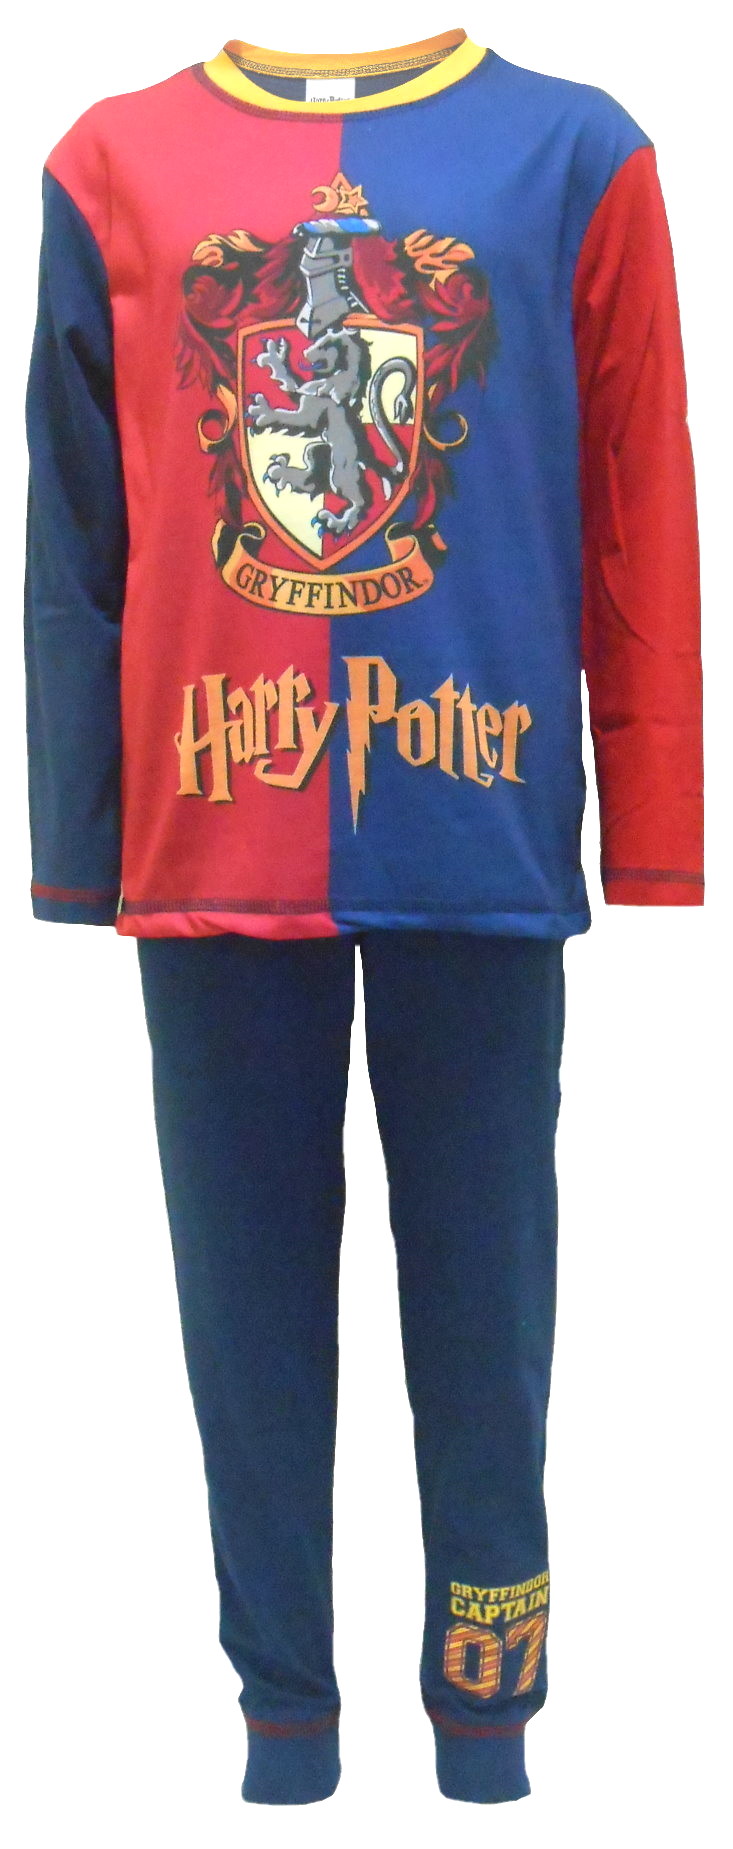 Harry Potter Pyjamas PB321 (2).JPG  by Thingimijigs